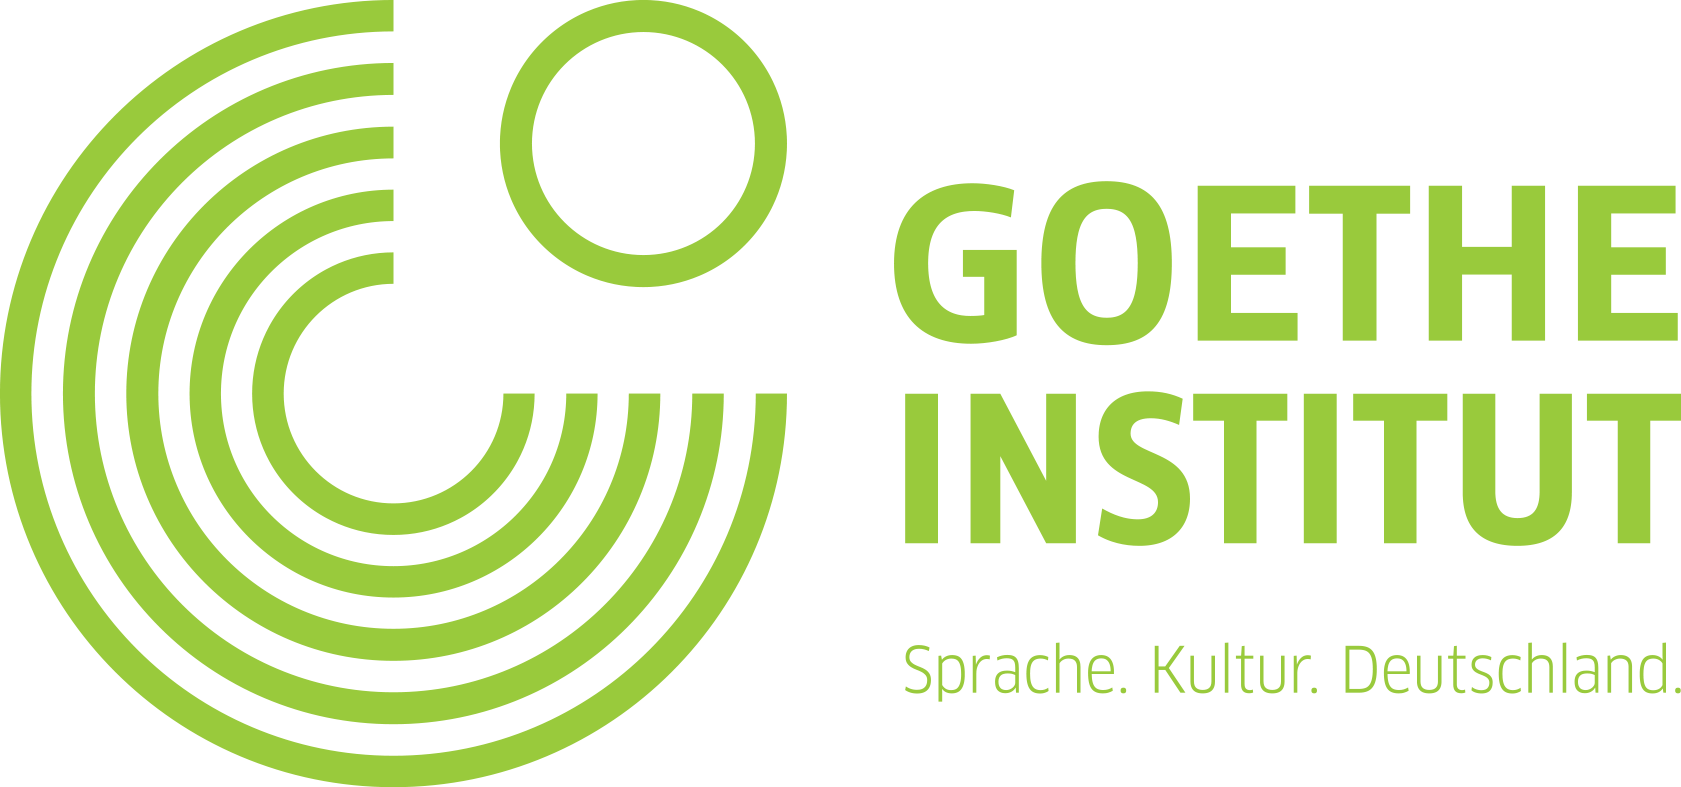 GI_Logo_inkl_Claim_horizontal_green_IsoCV2.png